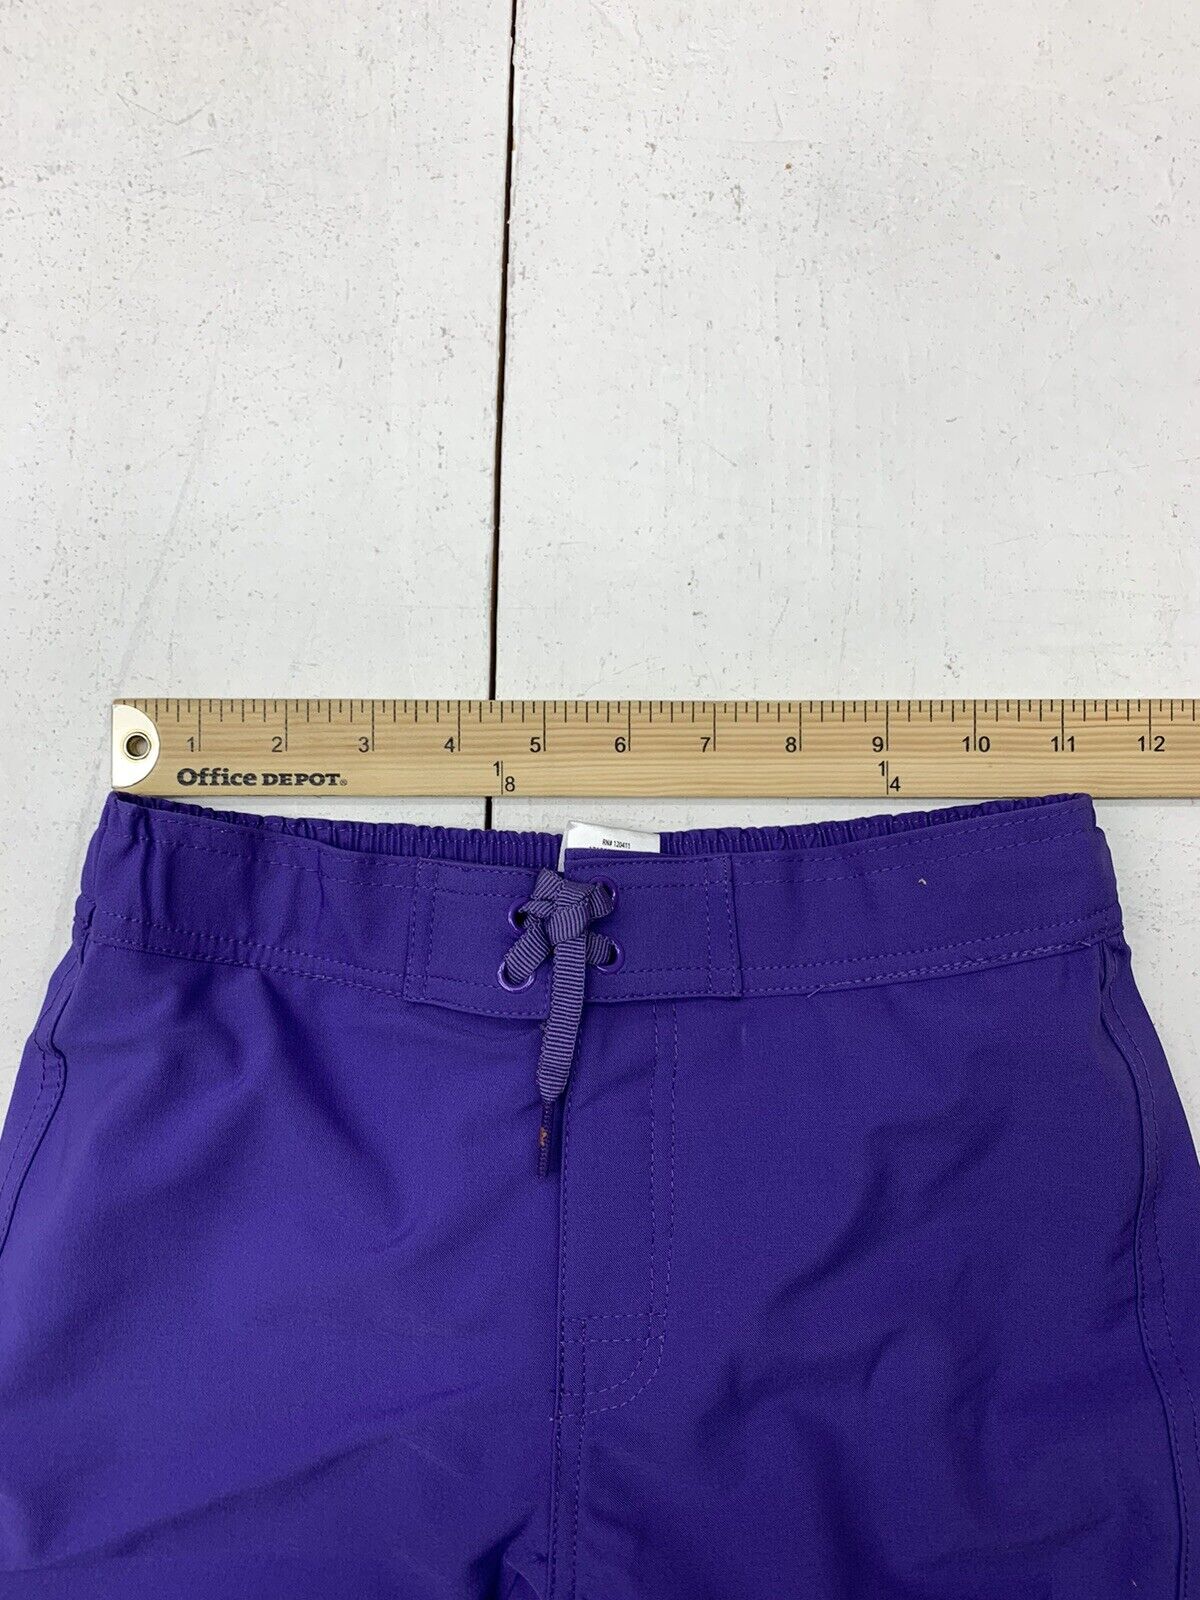 UV Skinz Womens Purple Sinwear Shorts Size 10 - beyond exchange